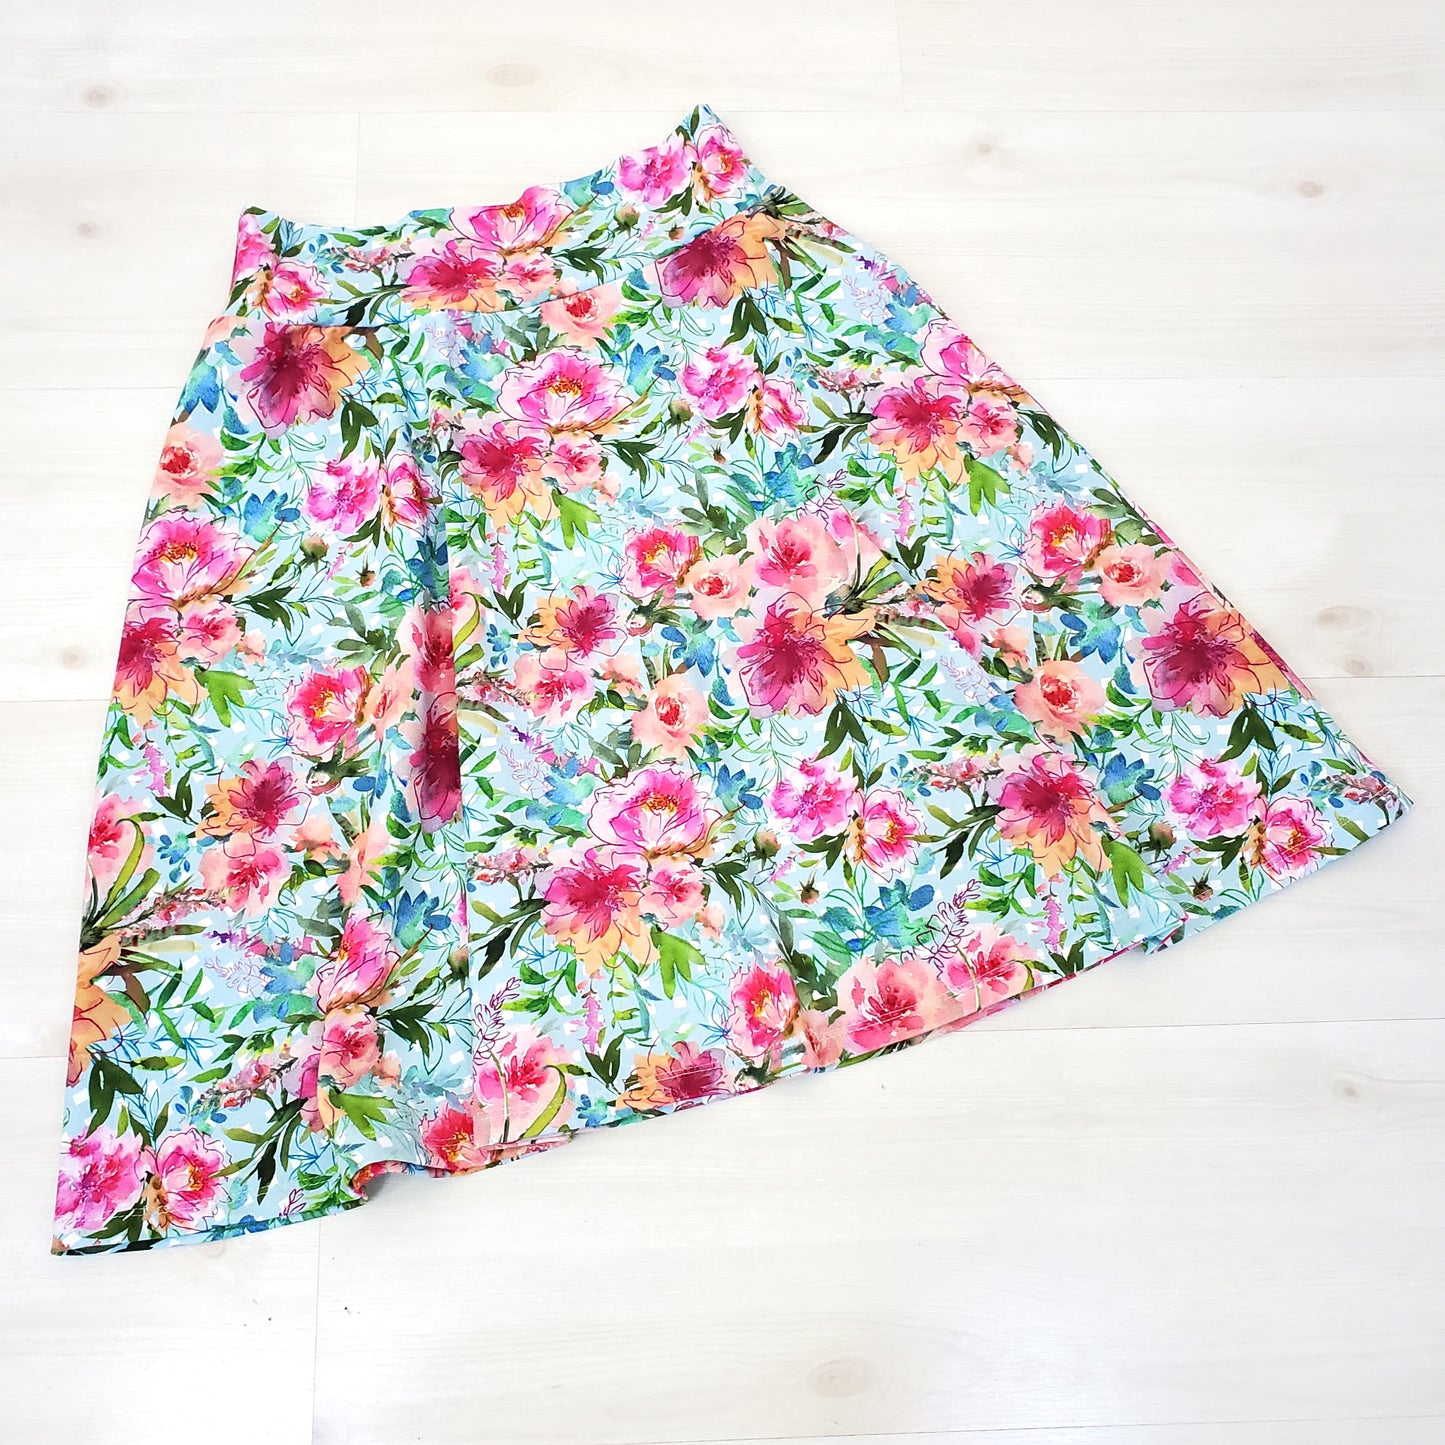 Women's Floral Swing Skirt in Organic Cotton Jersey